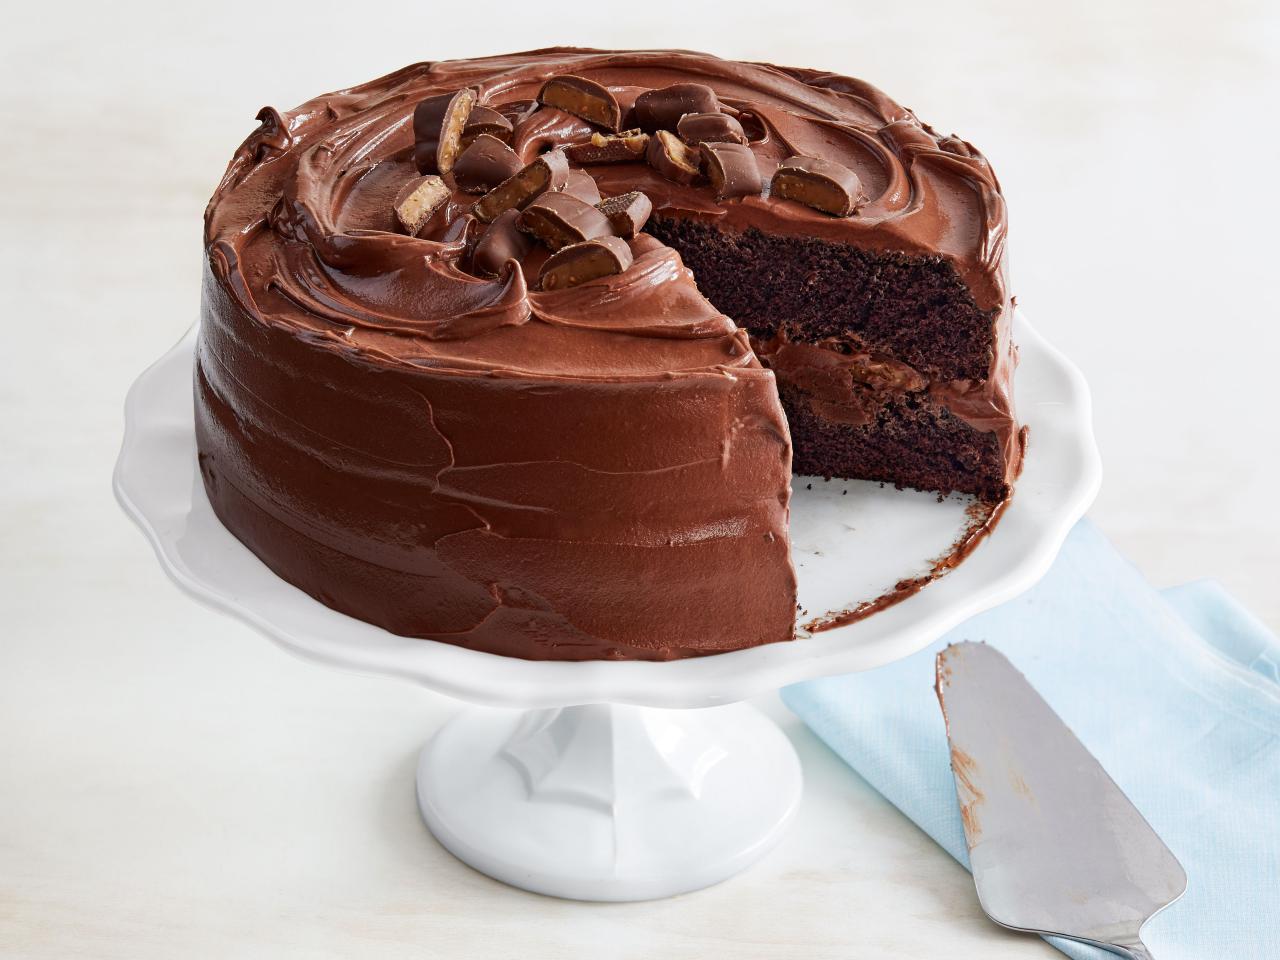 Best chocolate cake recipes: 55 delicious chocolate cake recipes